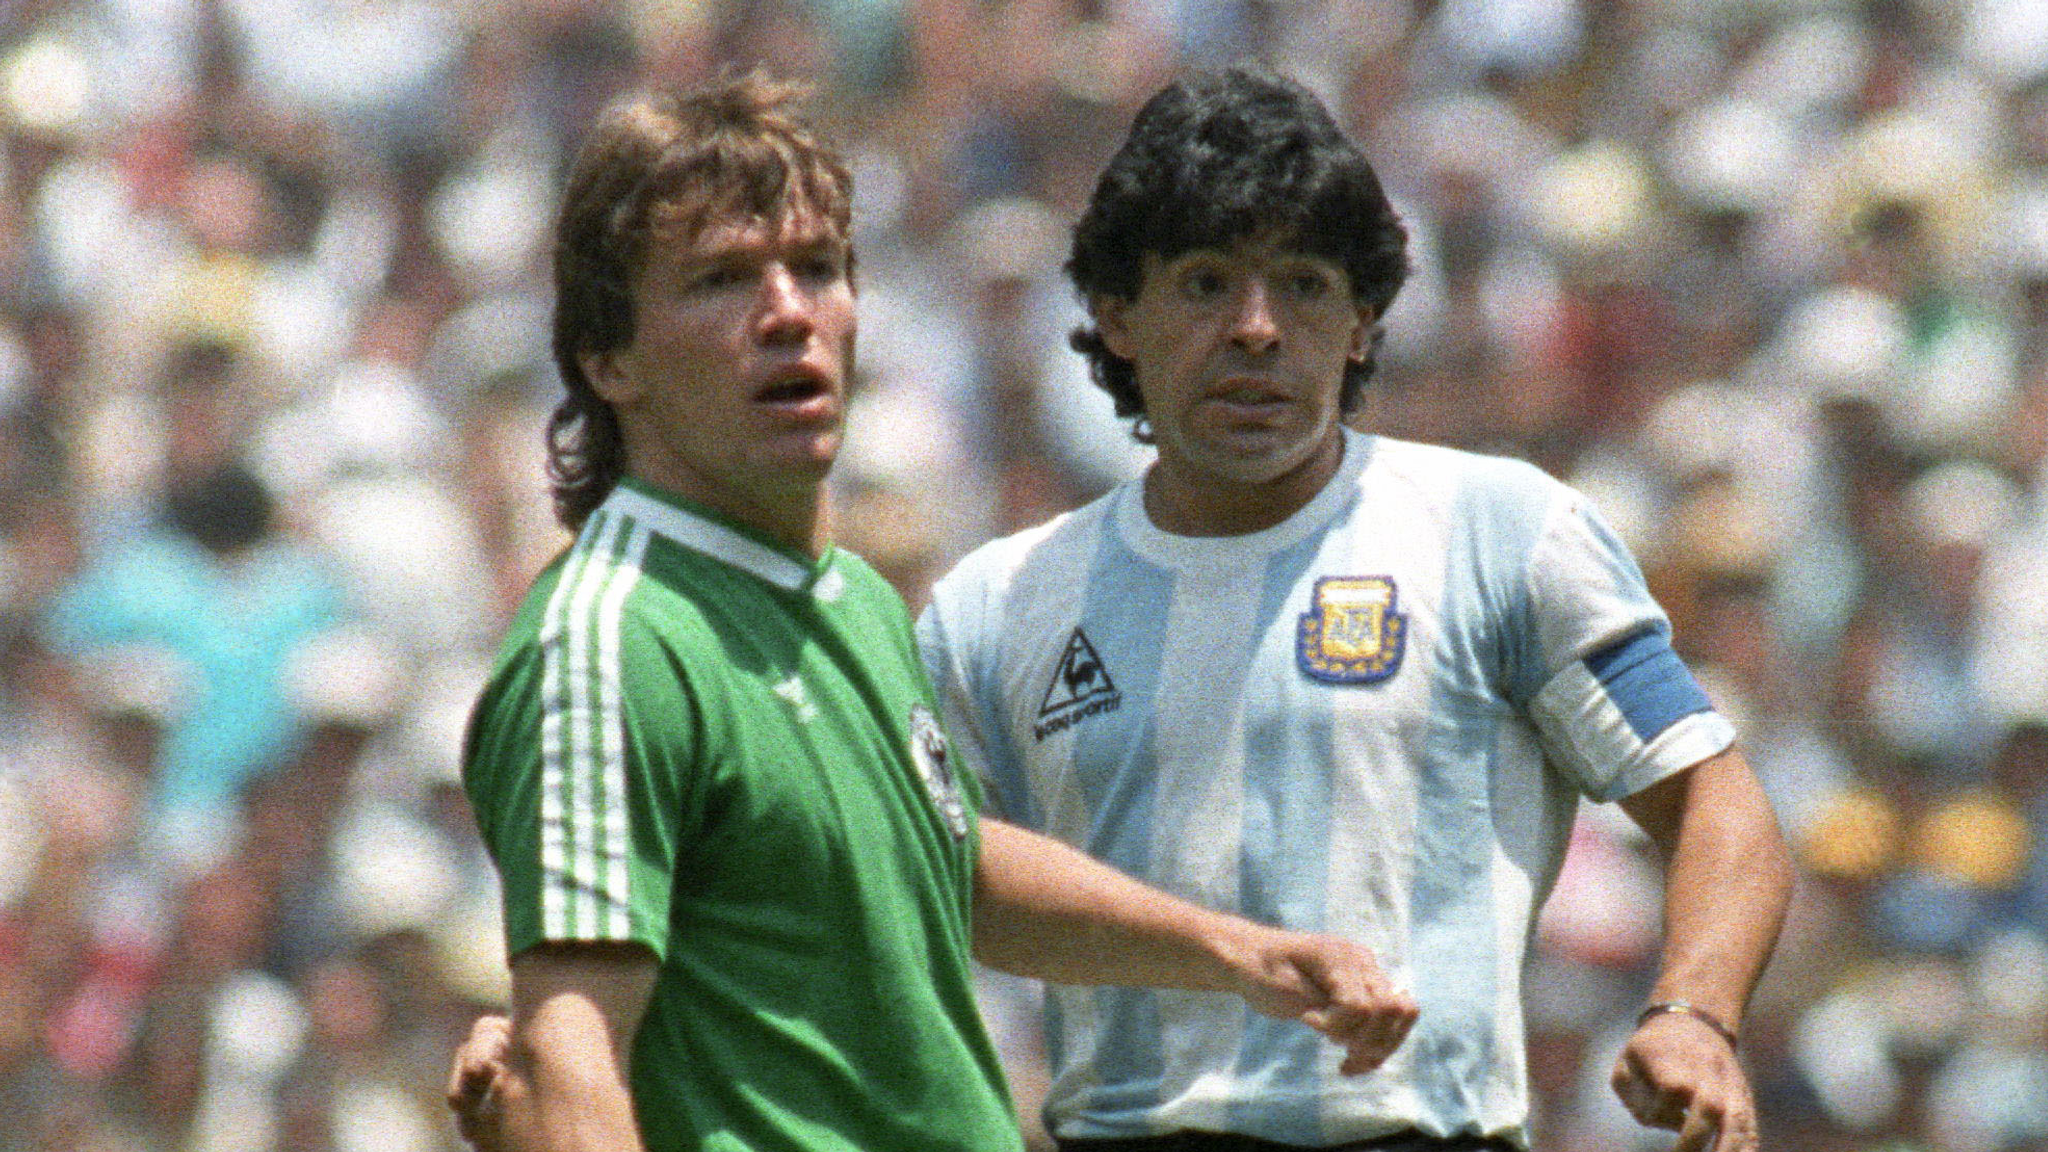 Mayordomo Leia Alergia Diego Maradona's 1986 World Cup final shirt returned to Argentina by German  opponent Lothar Matthaus | World News | Sky News